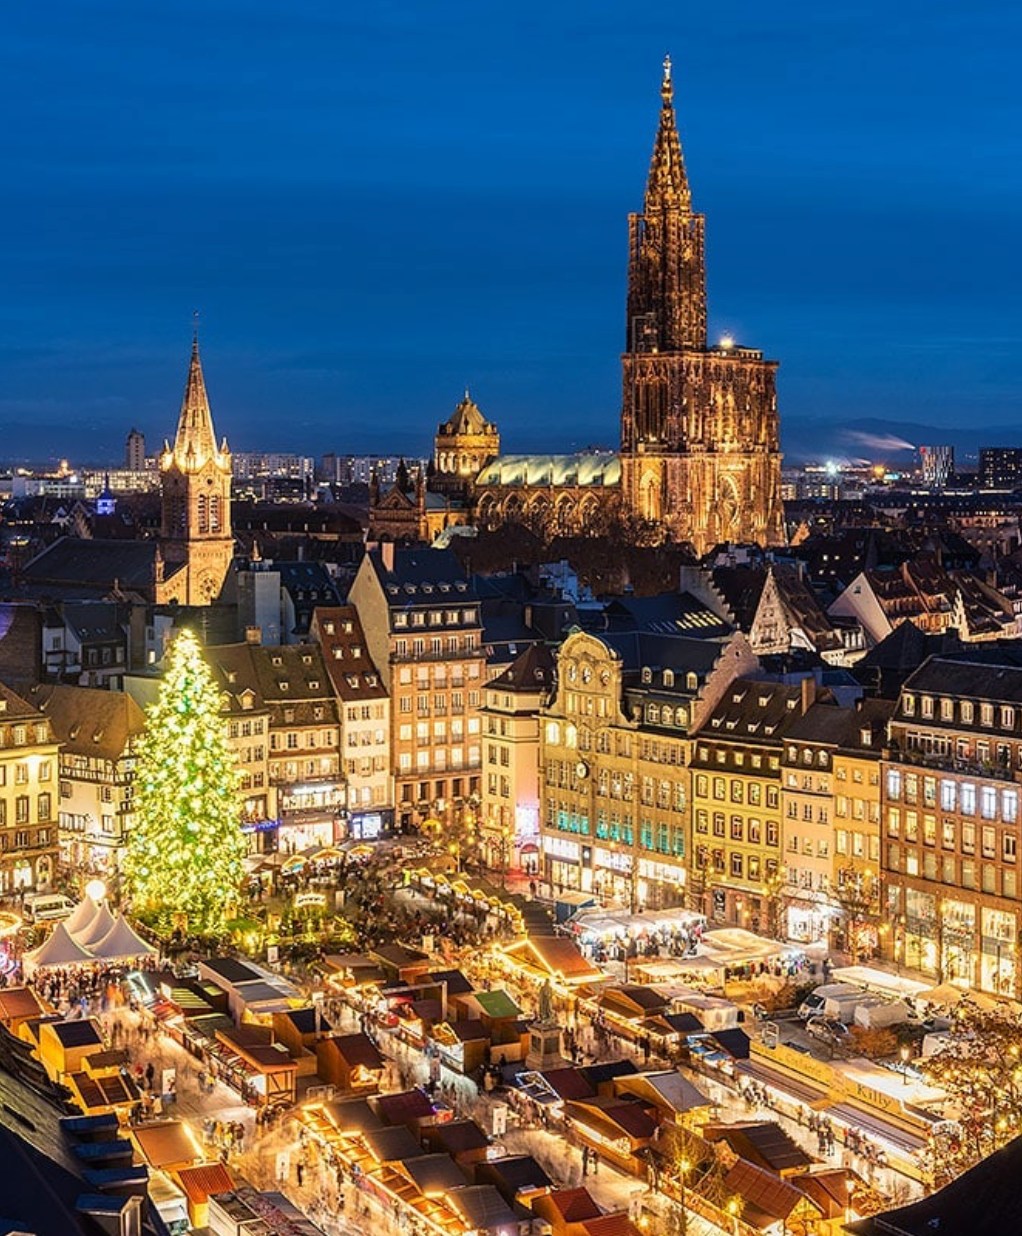 Strasbourg Christmas Market: A Festive Wonderland in the Heart of Alsace